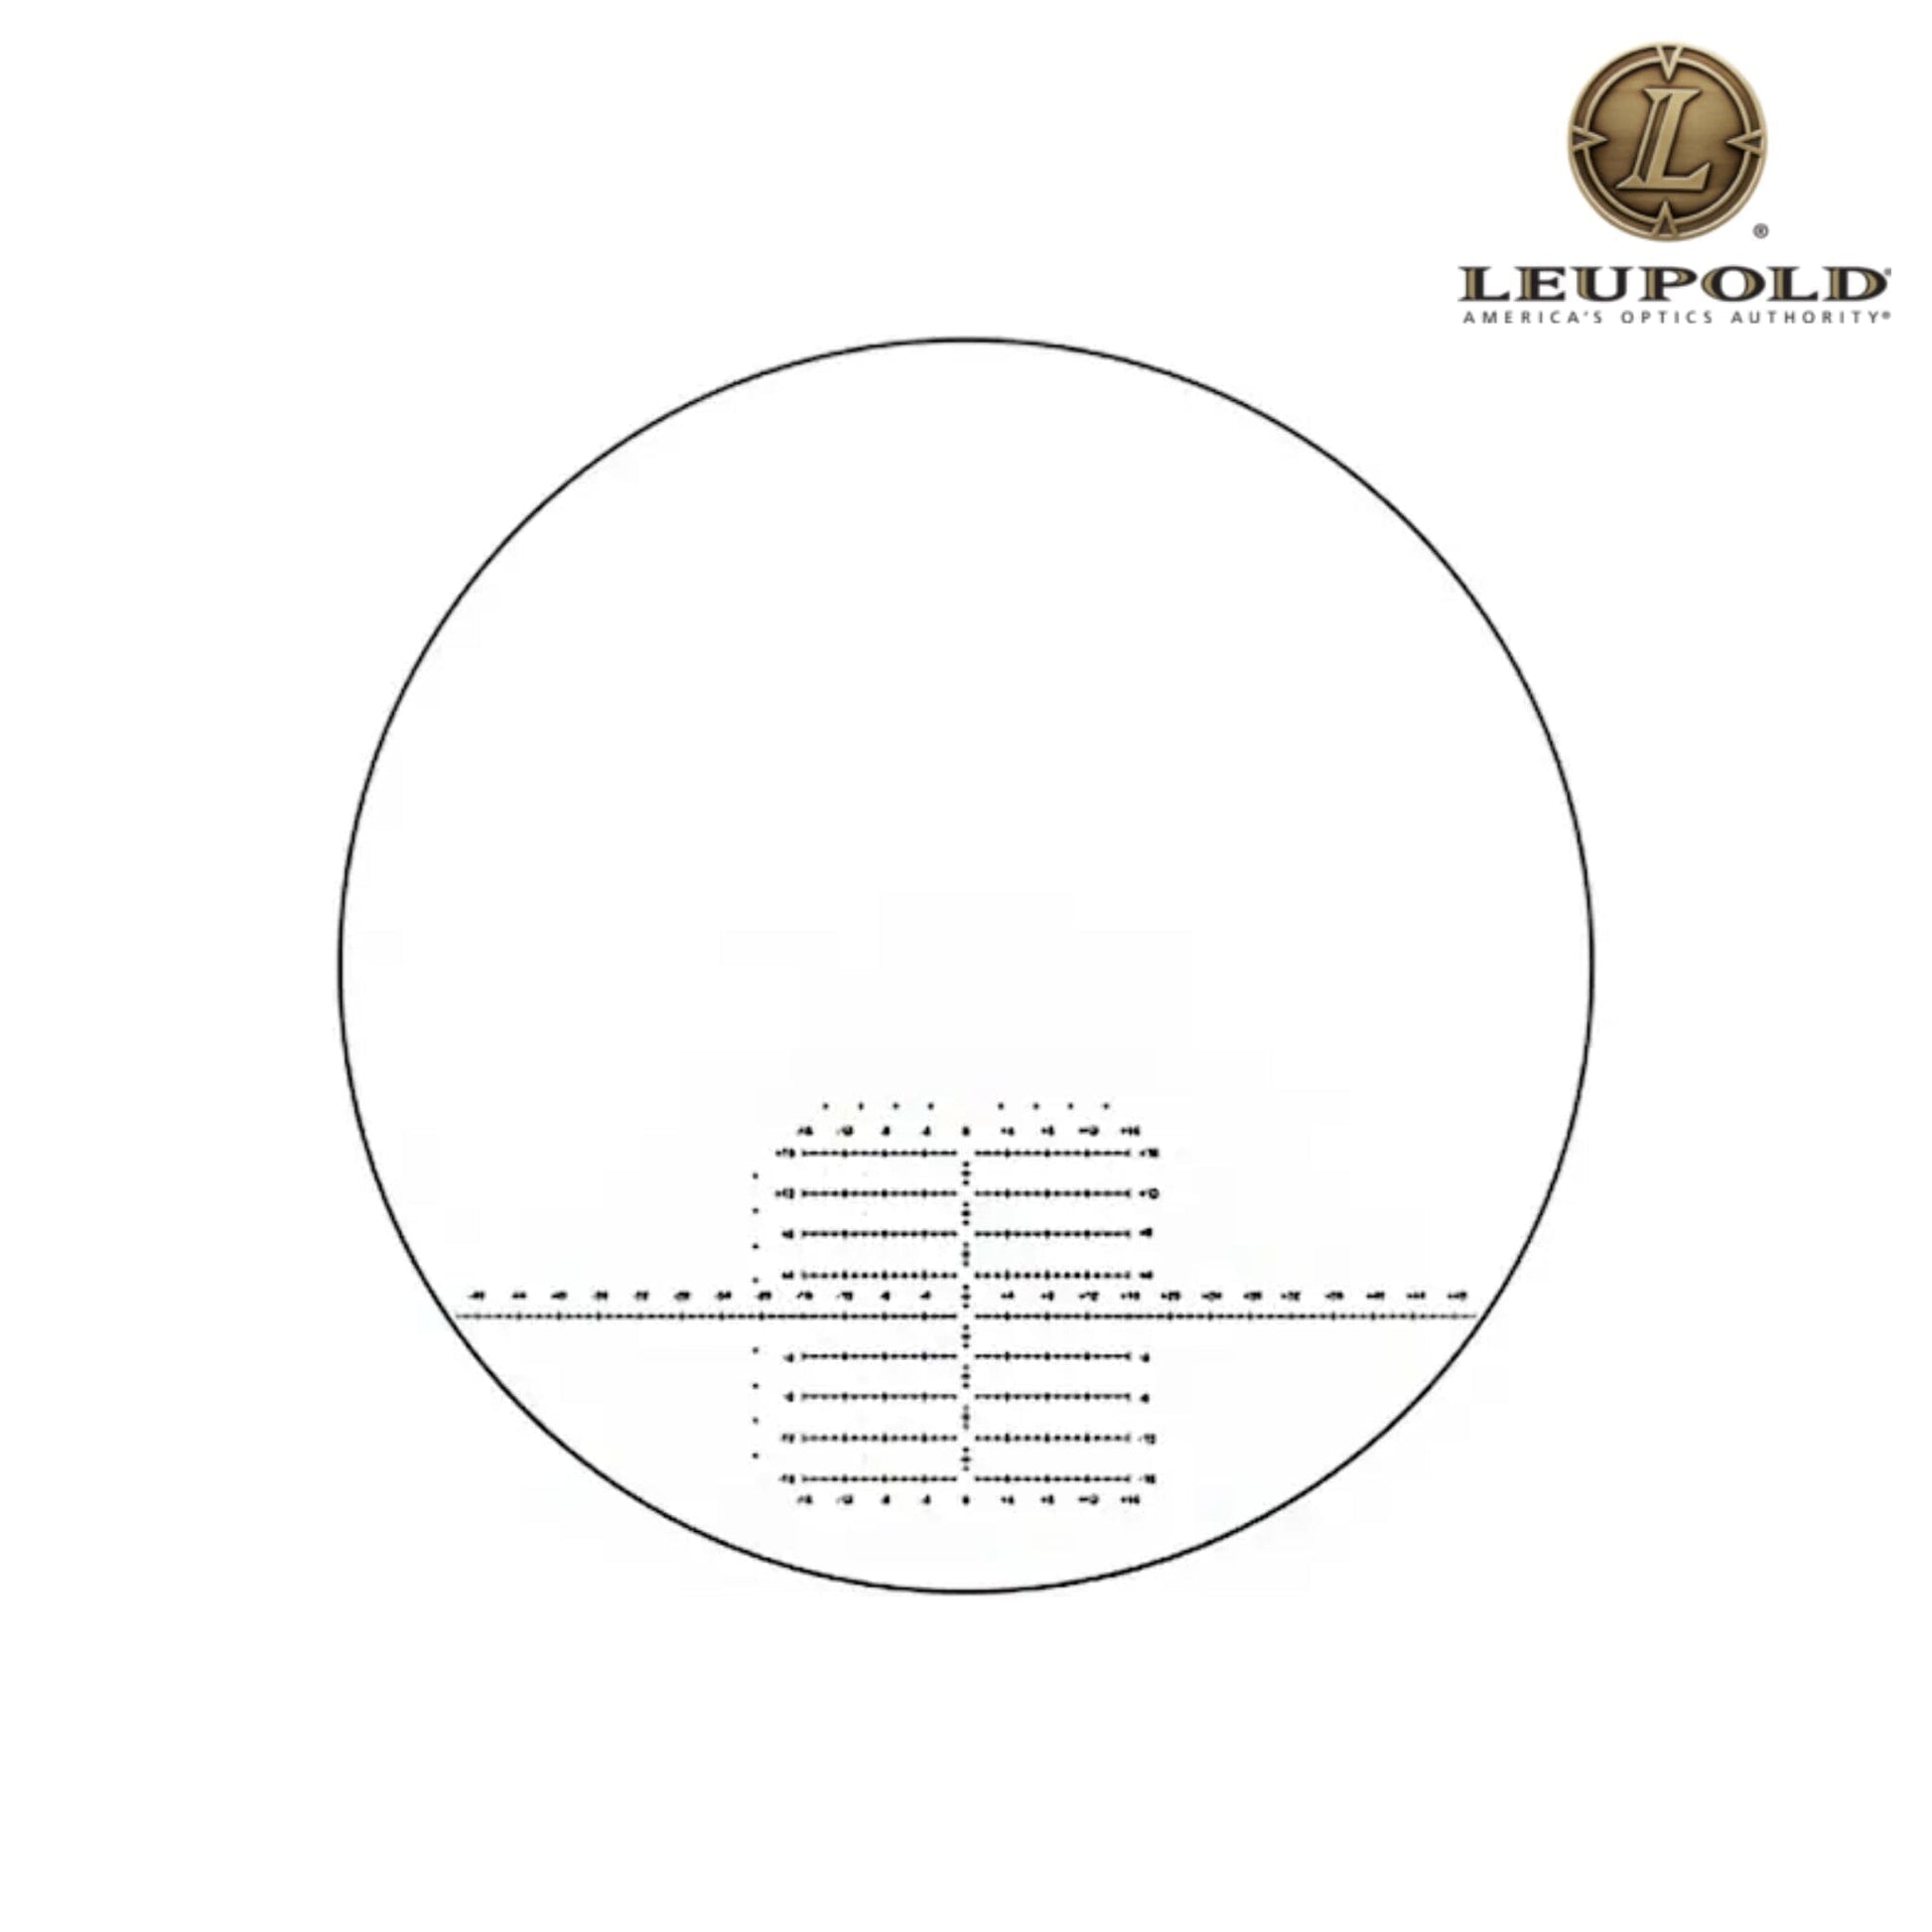 Leupold Gold Ring 20-60x80 Spotting Scope Impact Reticle 120377 Spotting Scope Leupold 